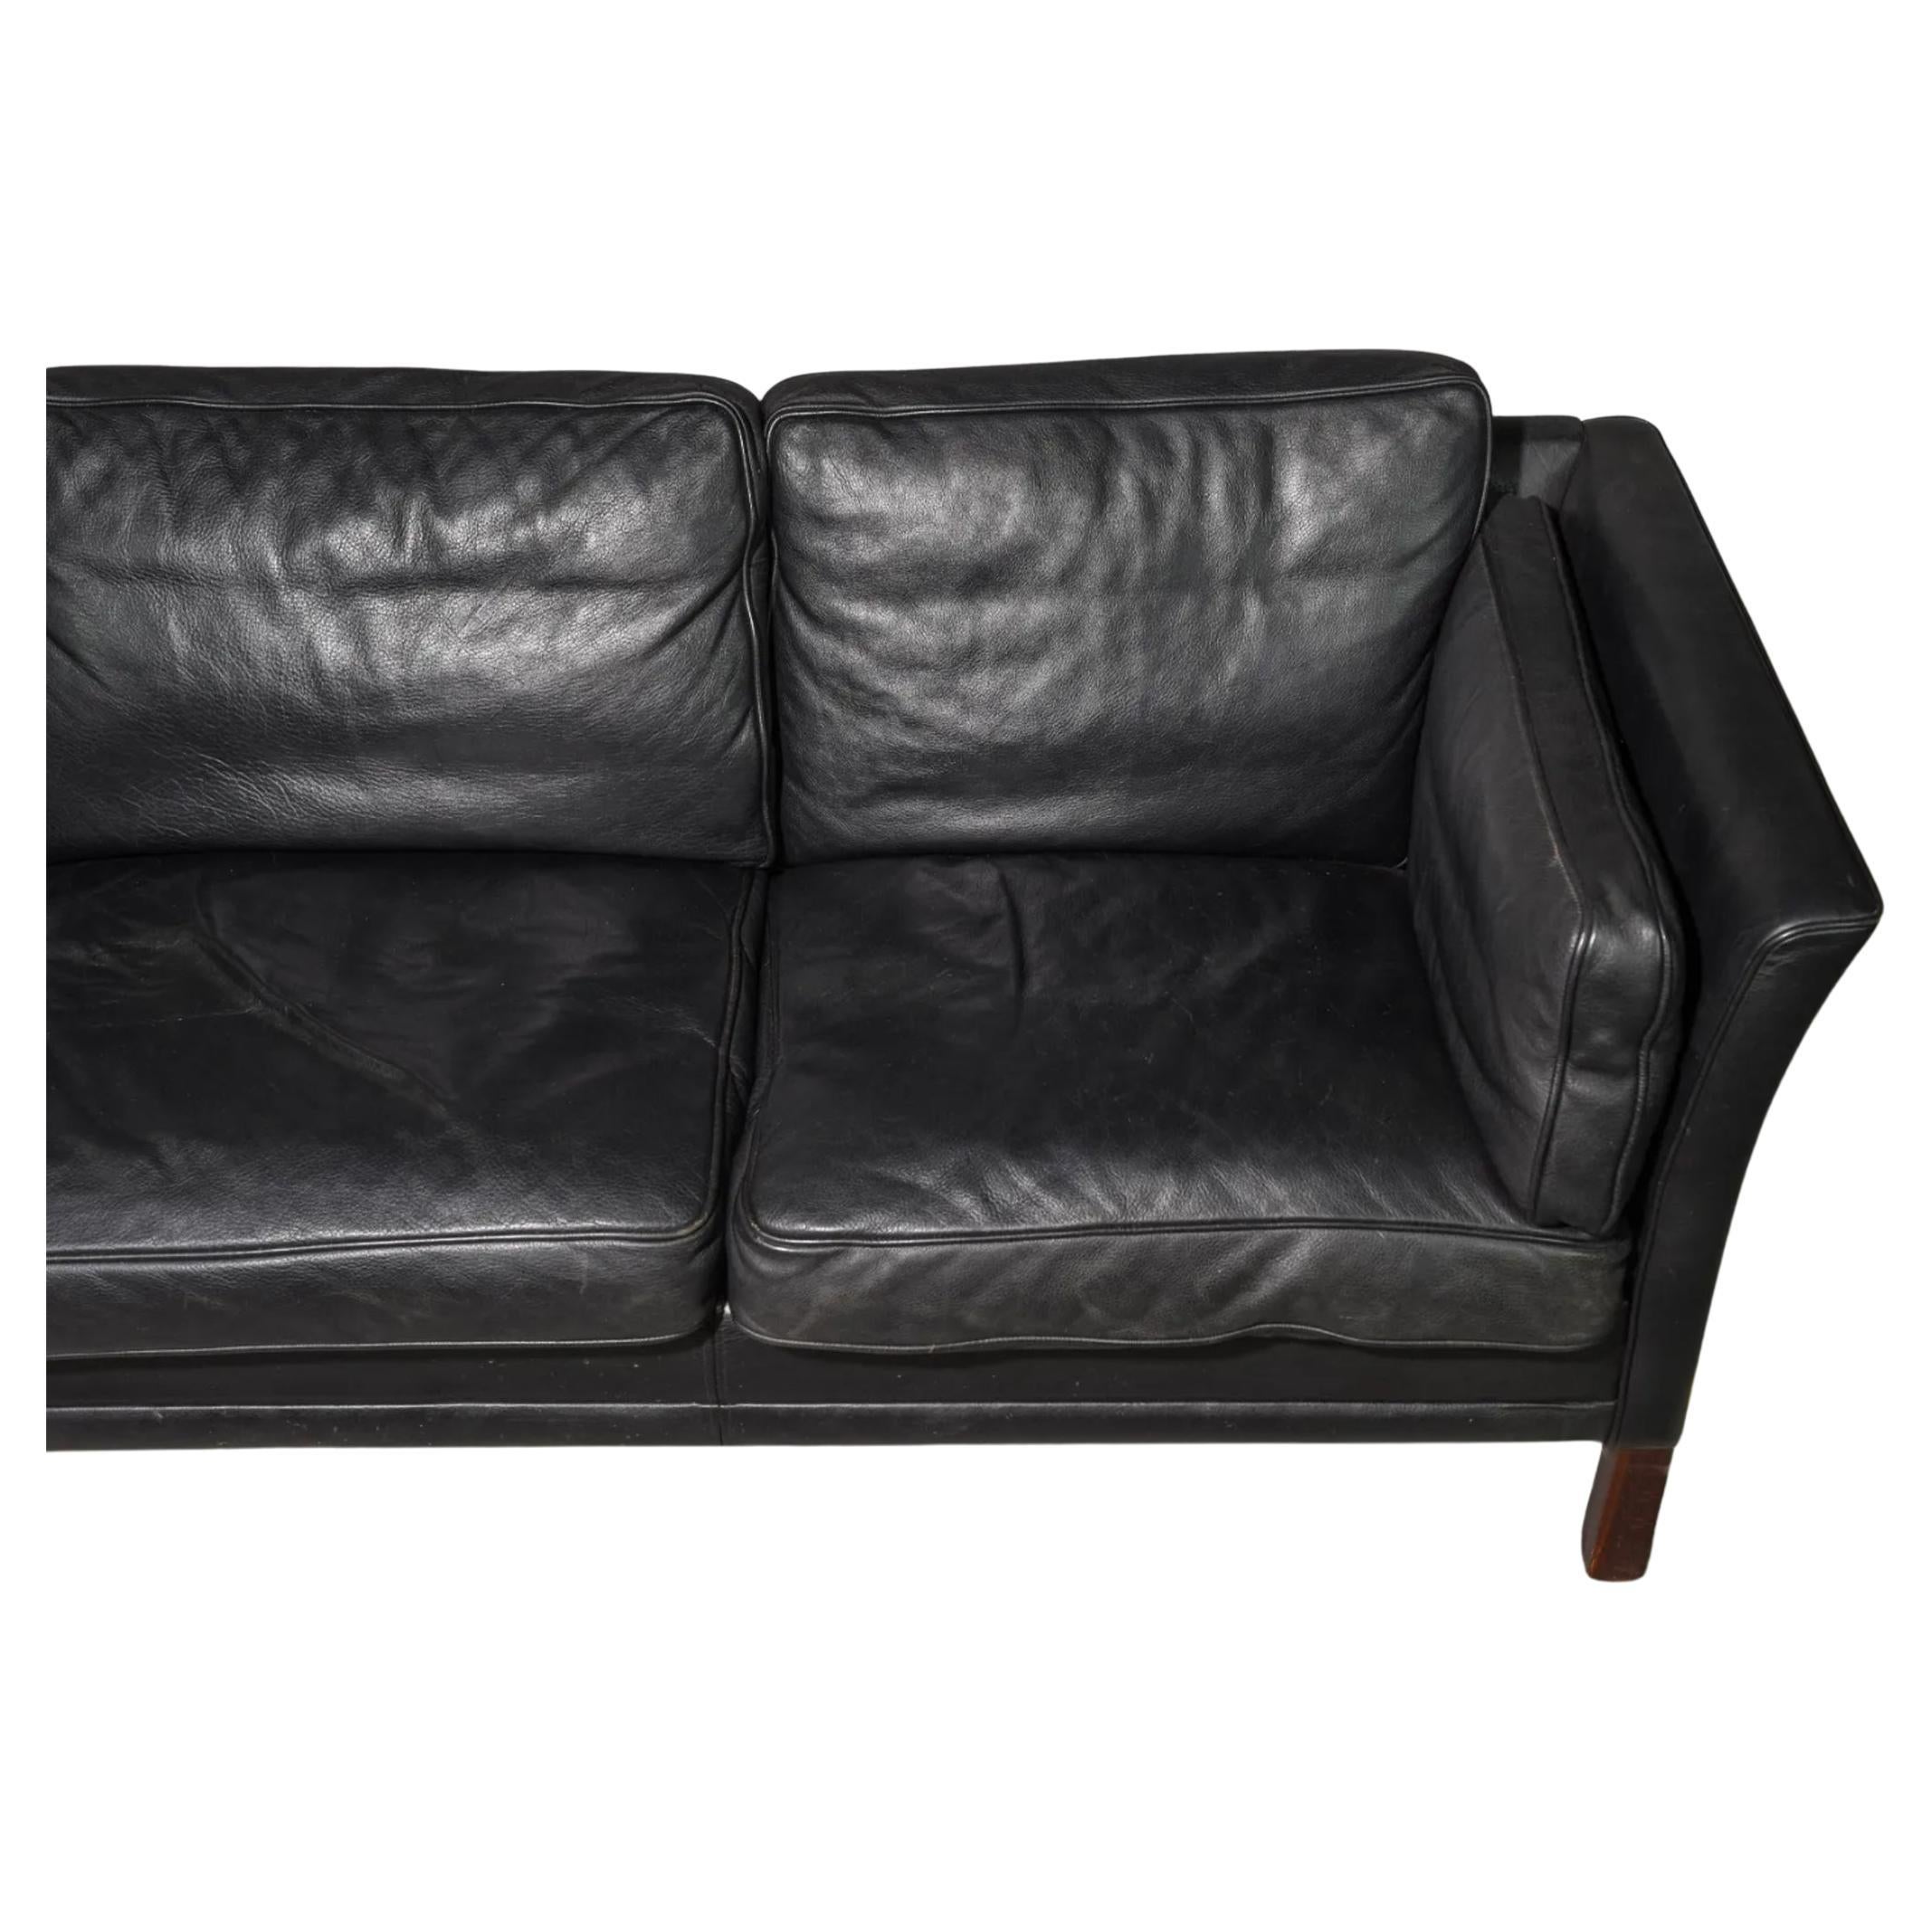 Mid-Century Modern Midcentury Danish Modern Low Curved Arm Black Leather 3 Seat Sofa Wood Legs